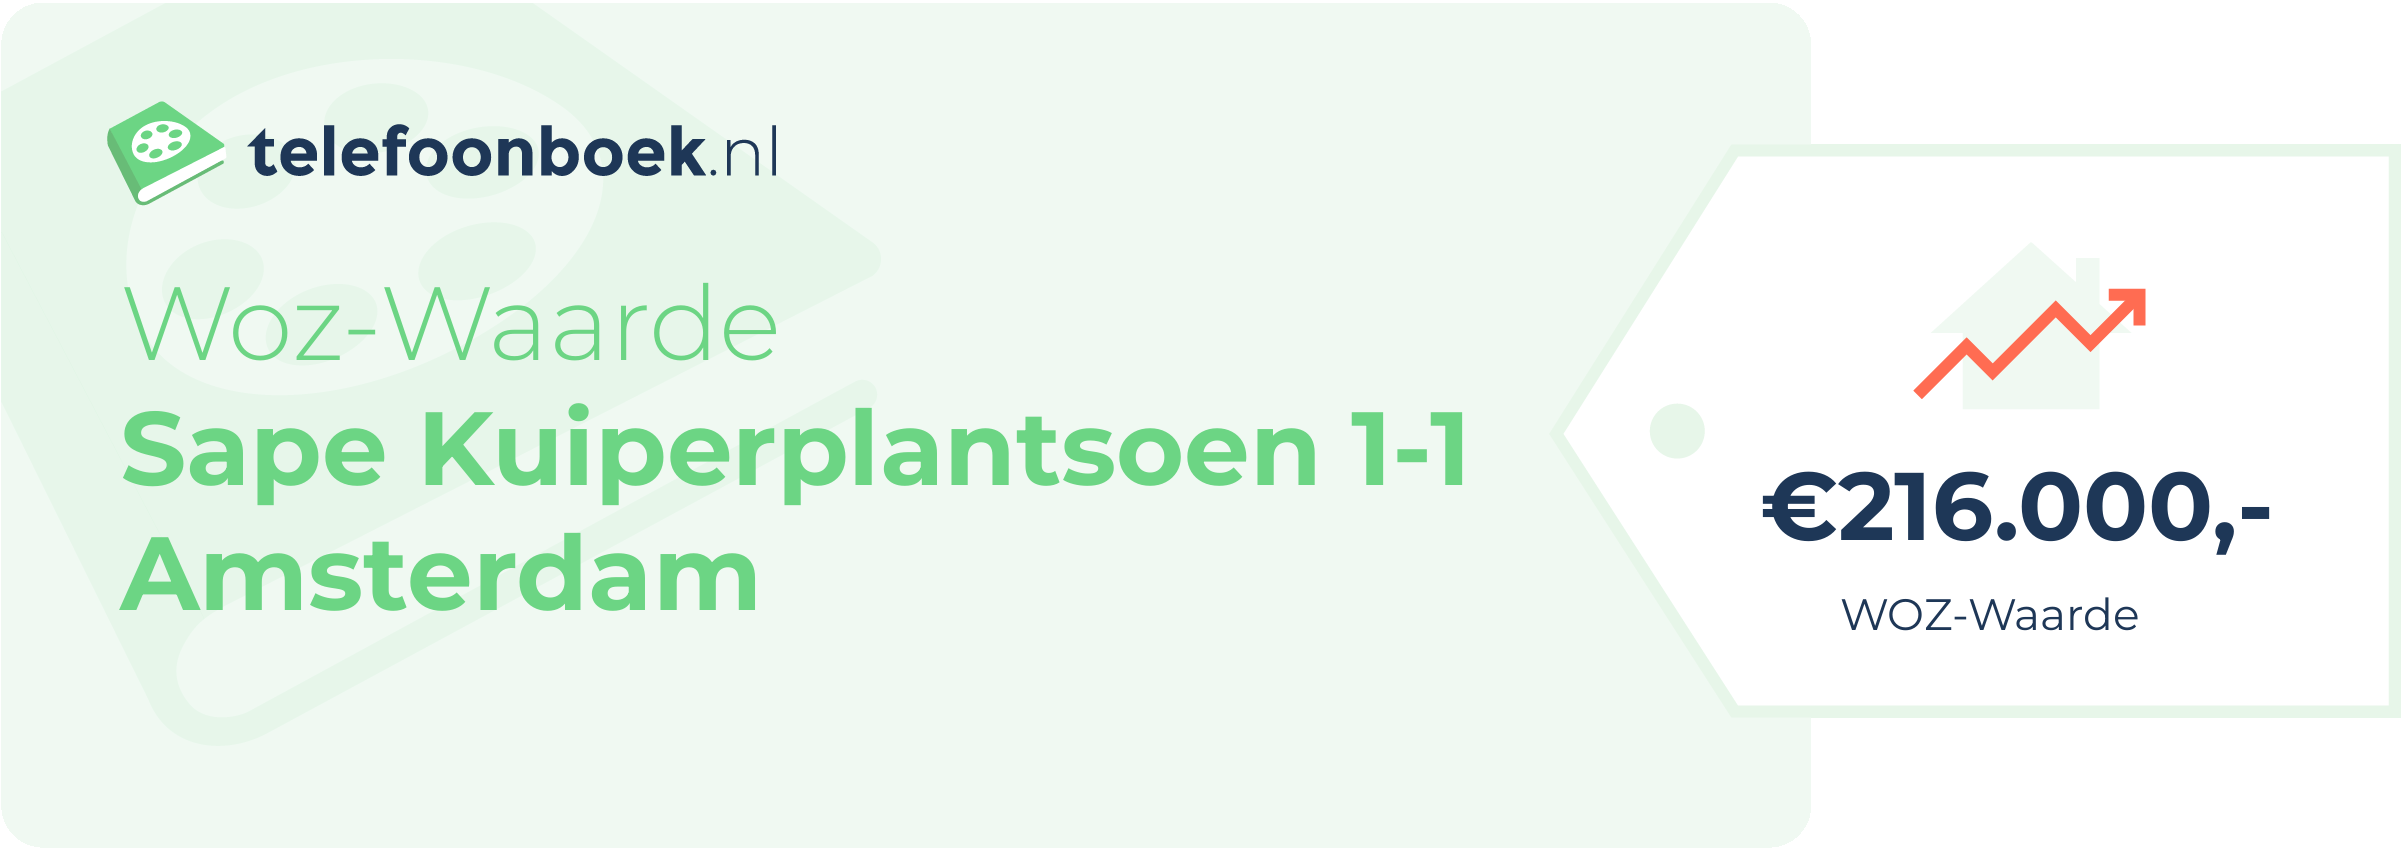 WOZ-waarde Sape Kuiperplantsoen 1-1 Amsterdam